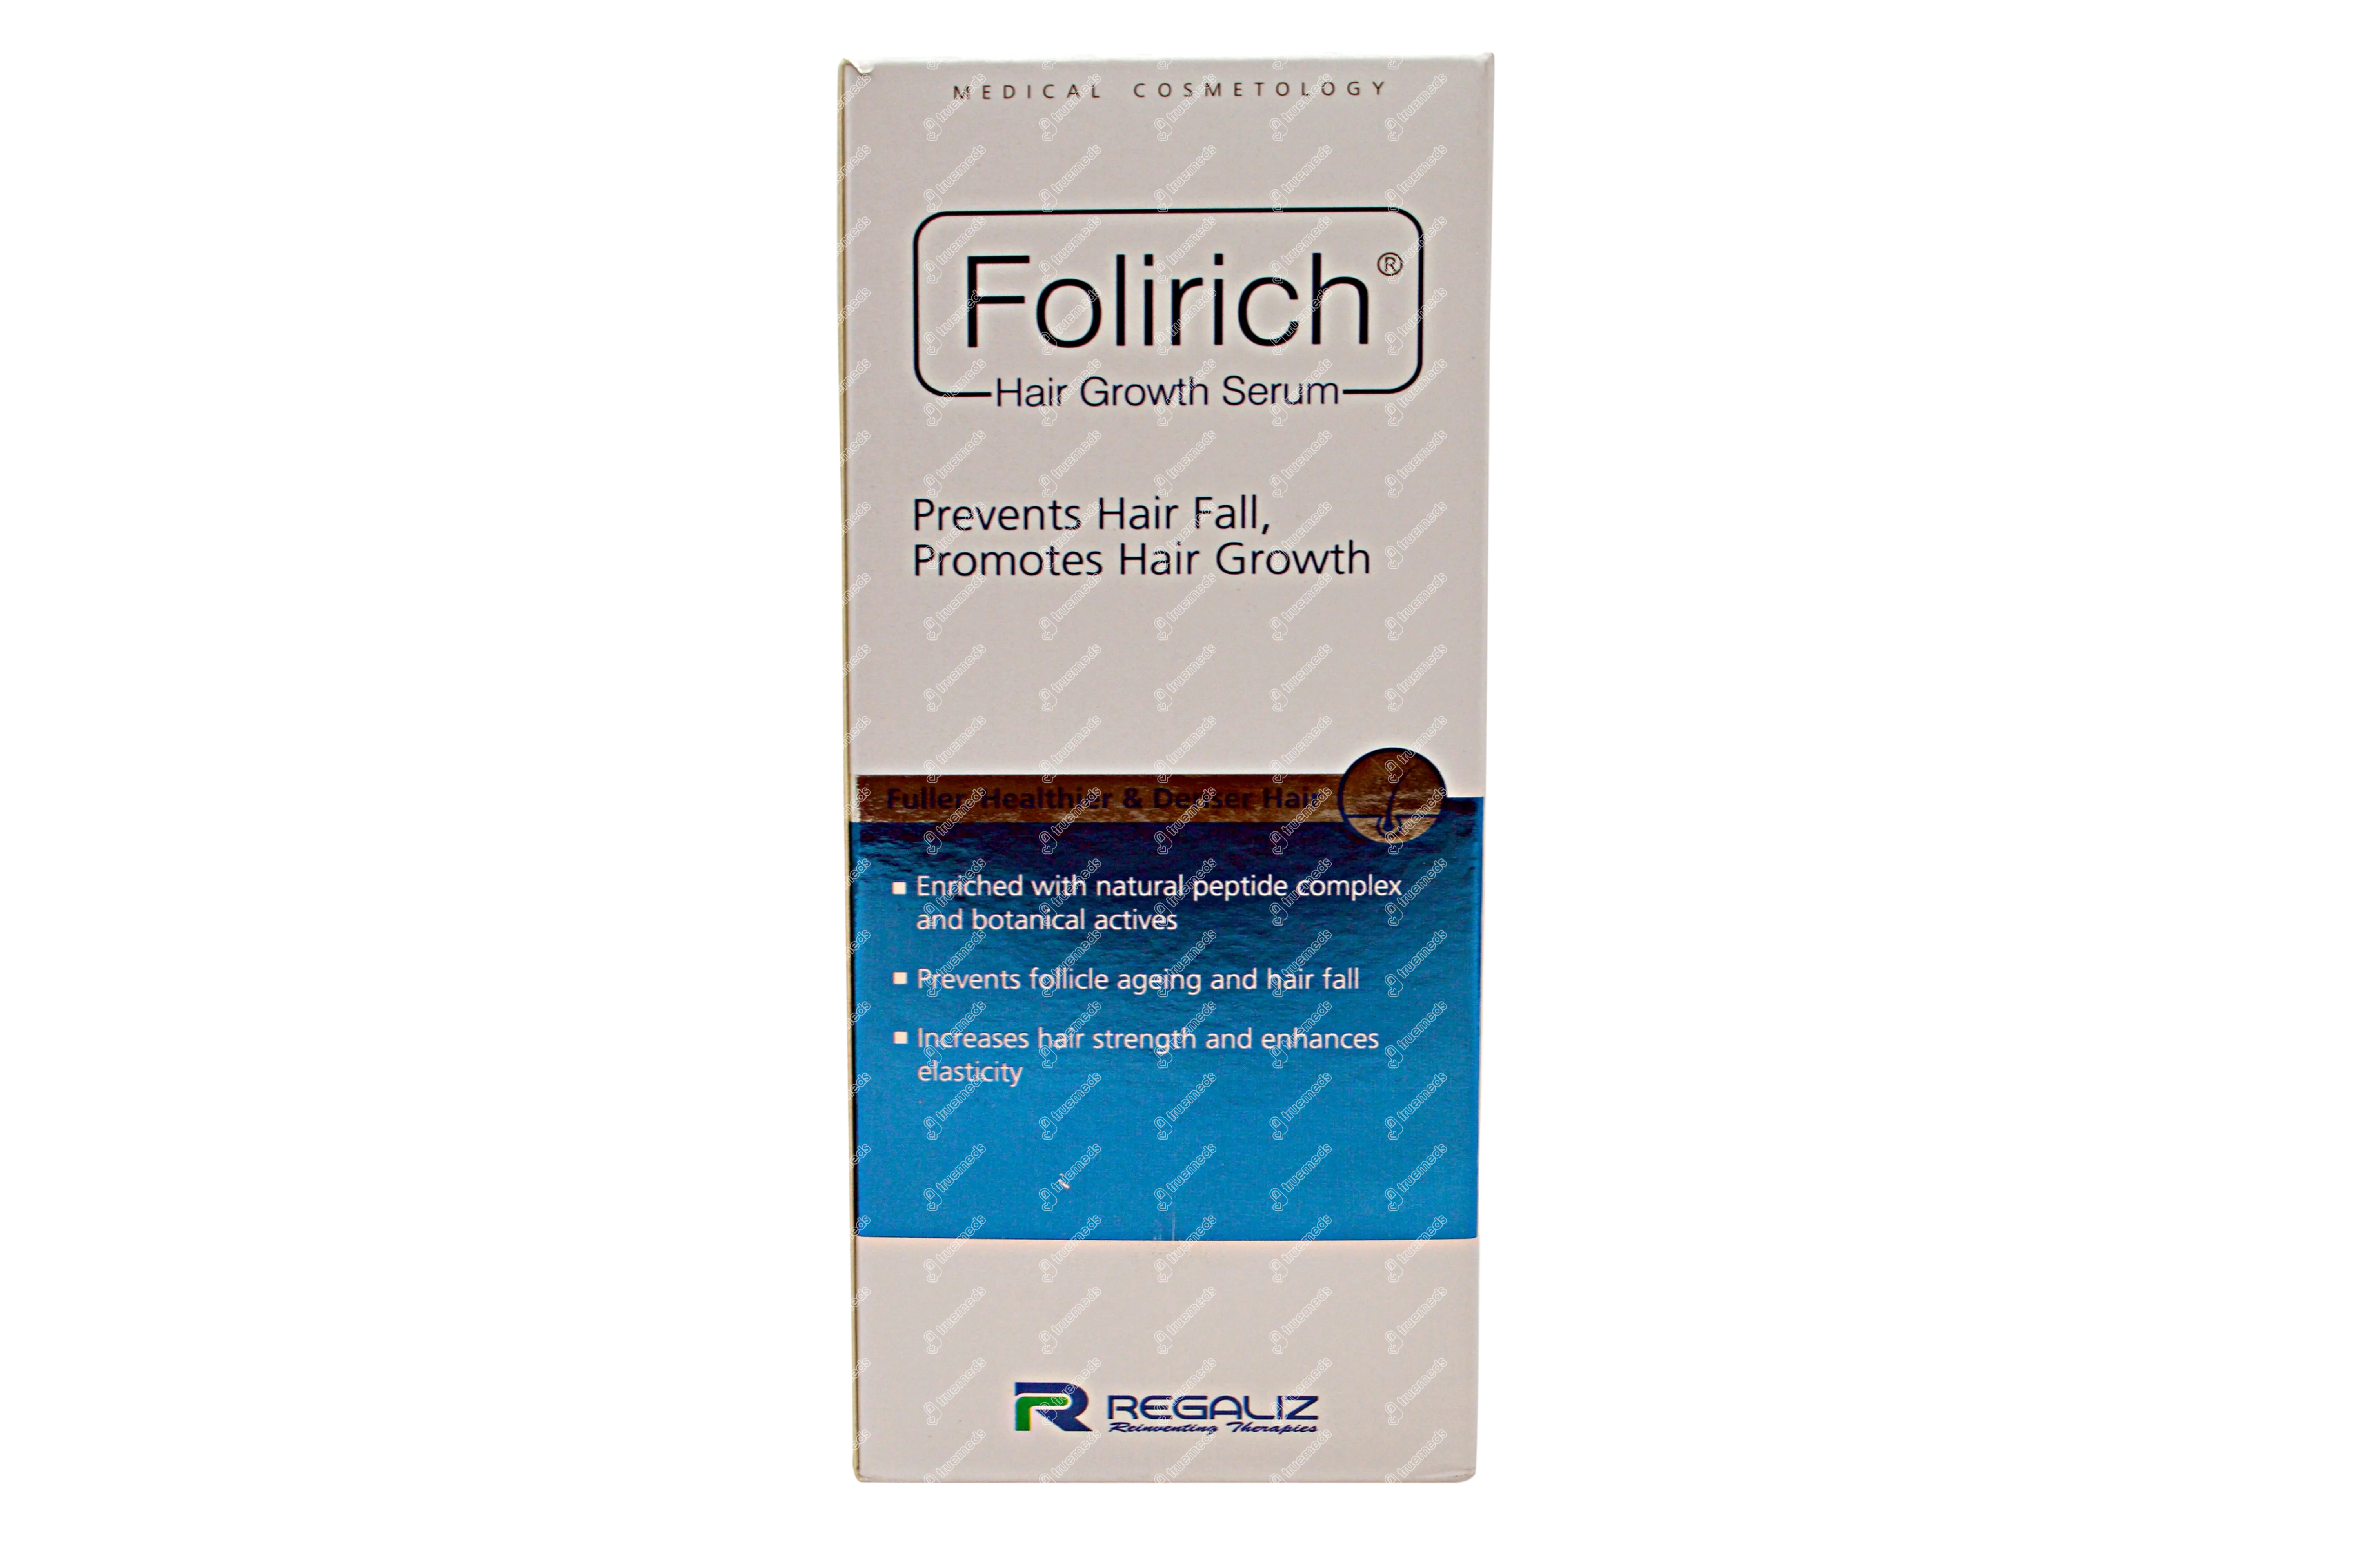 Folliserum Hair Growth Serum, 60 ml Price, Uses, Side Effects, Composition  - Apollo Pharmacy